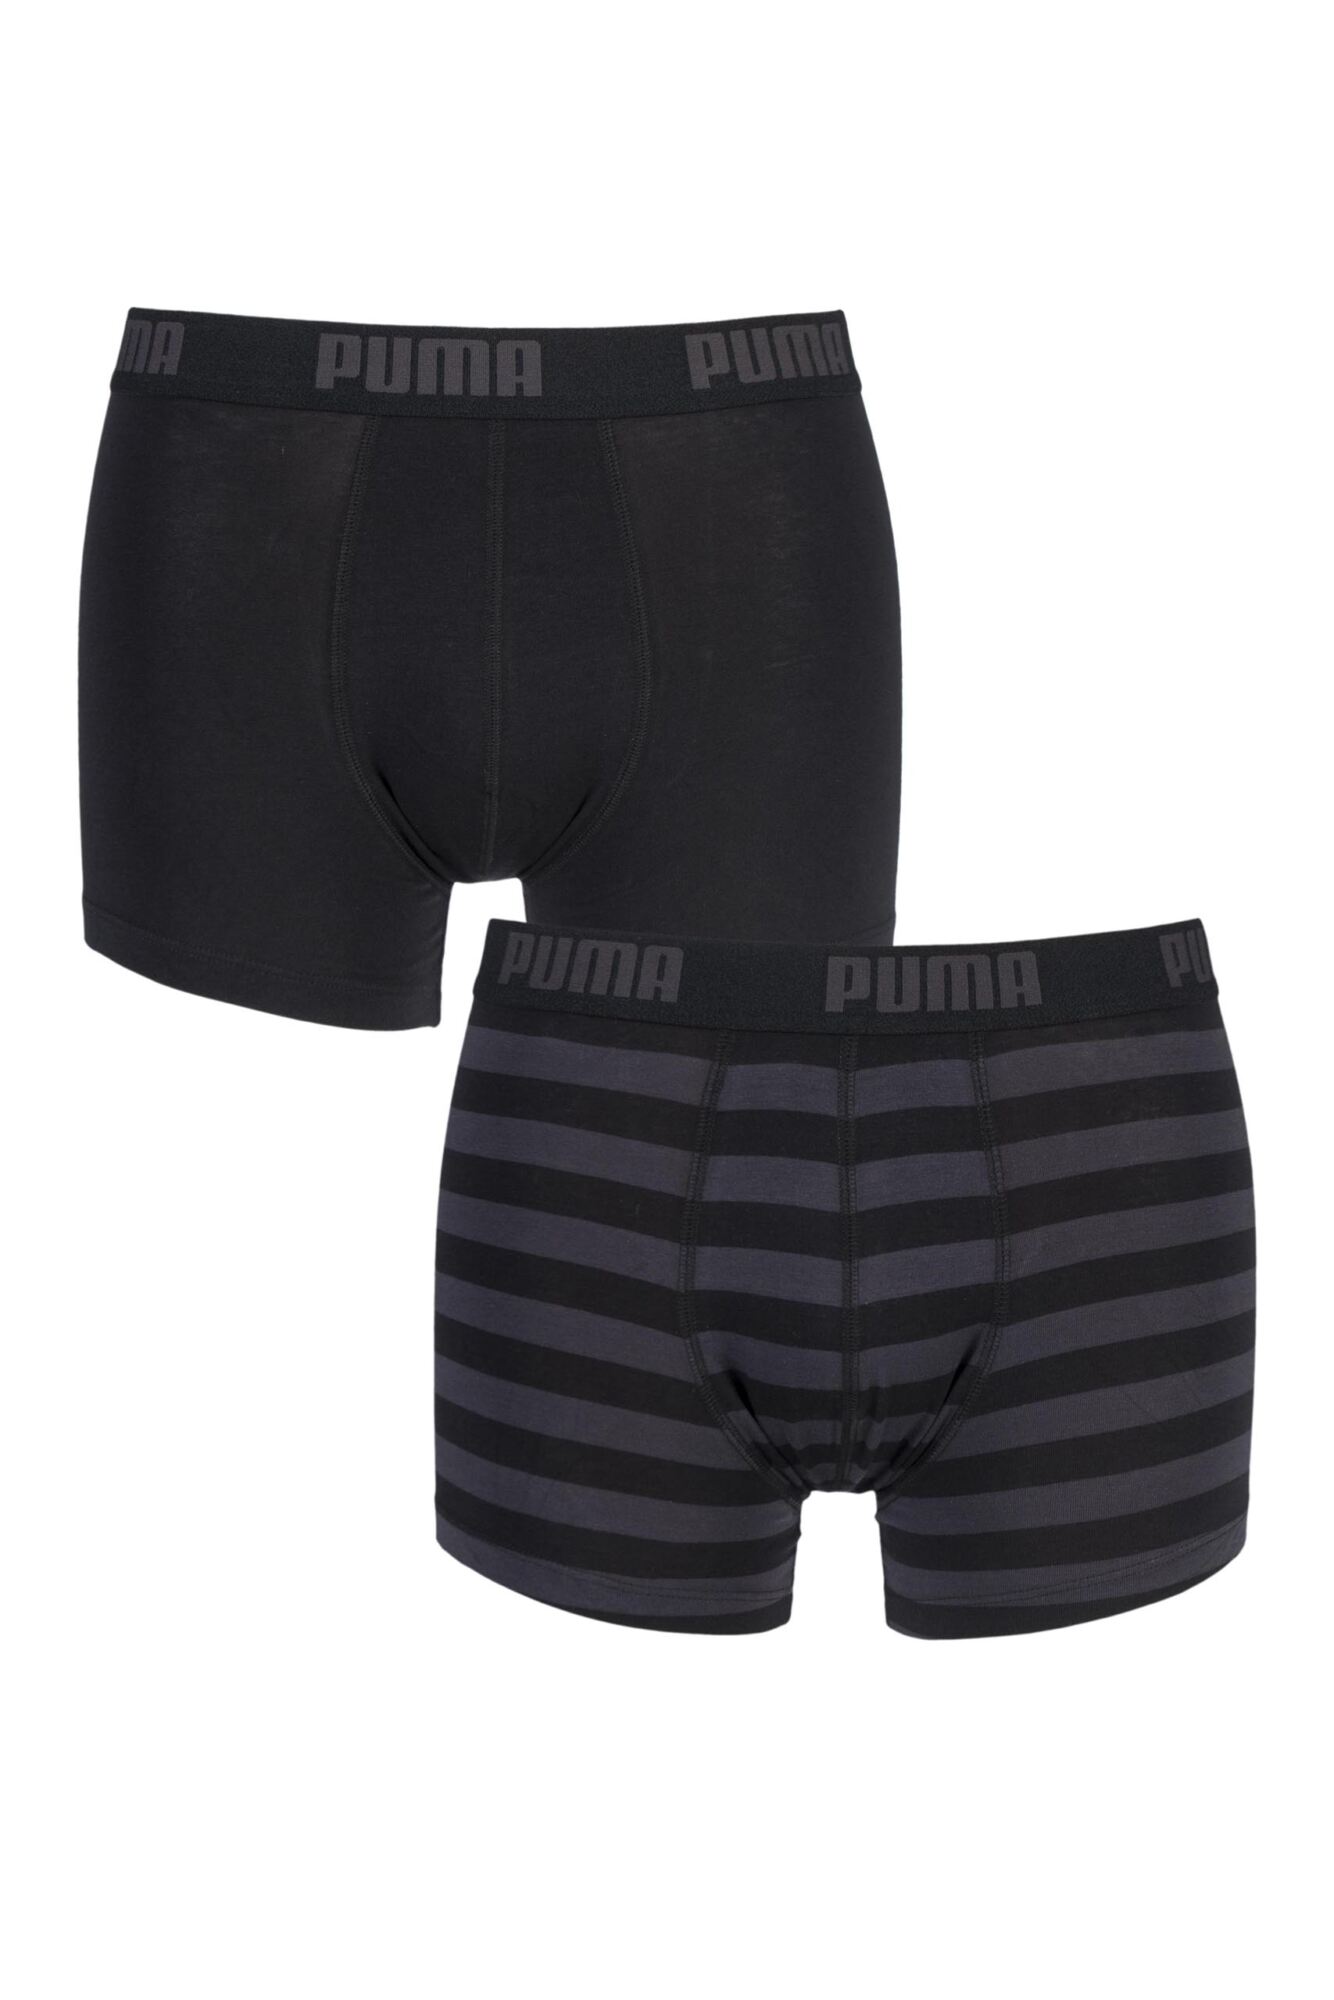 2 Pack Plain and Striped Cotton Boxer Shorts Men's - Puma